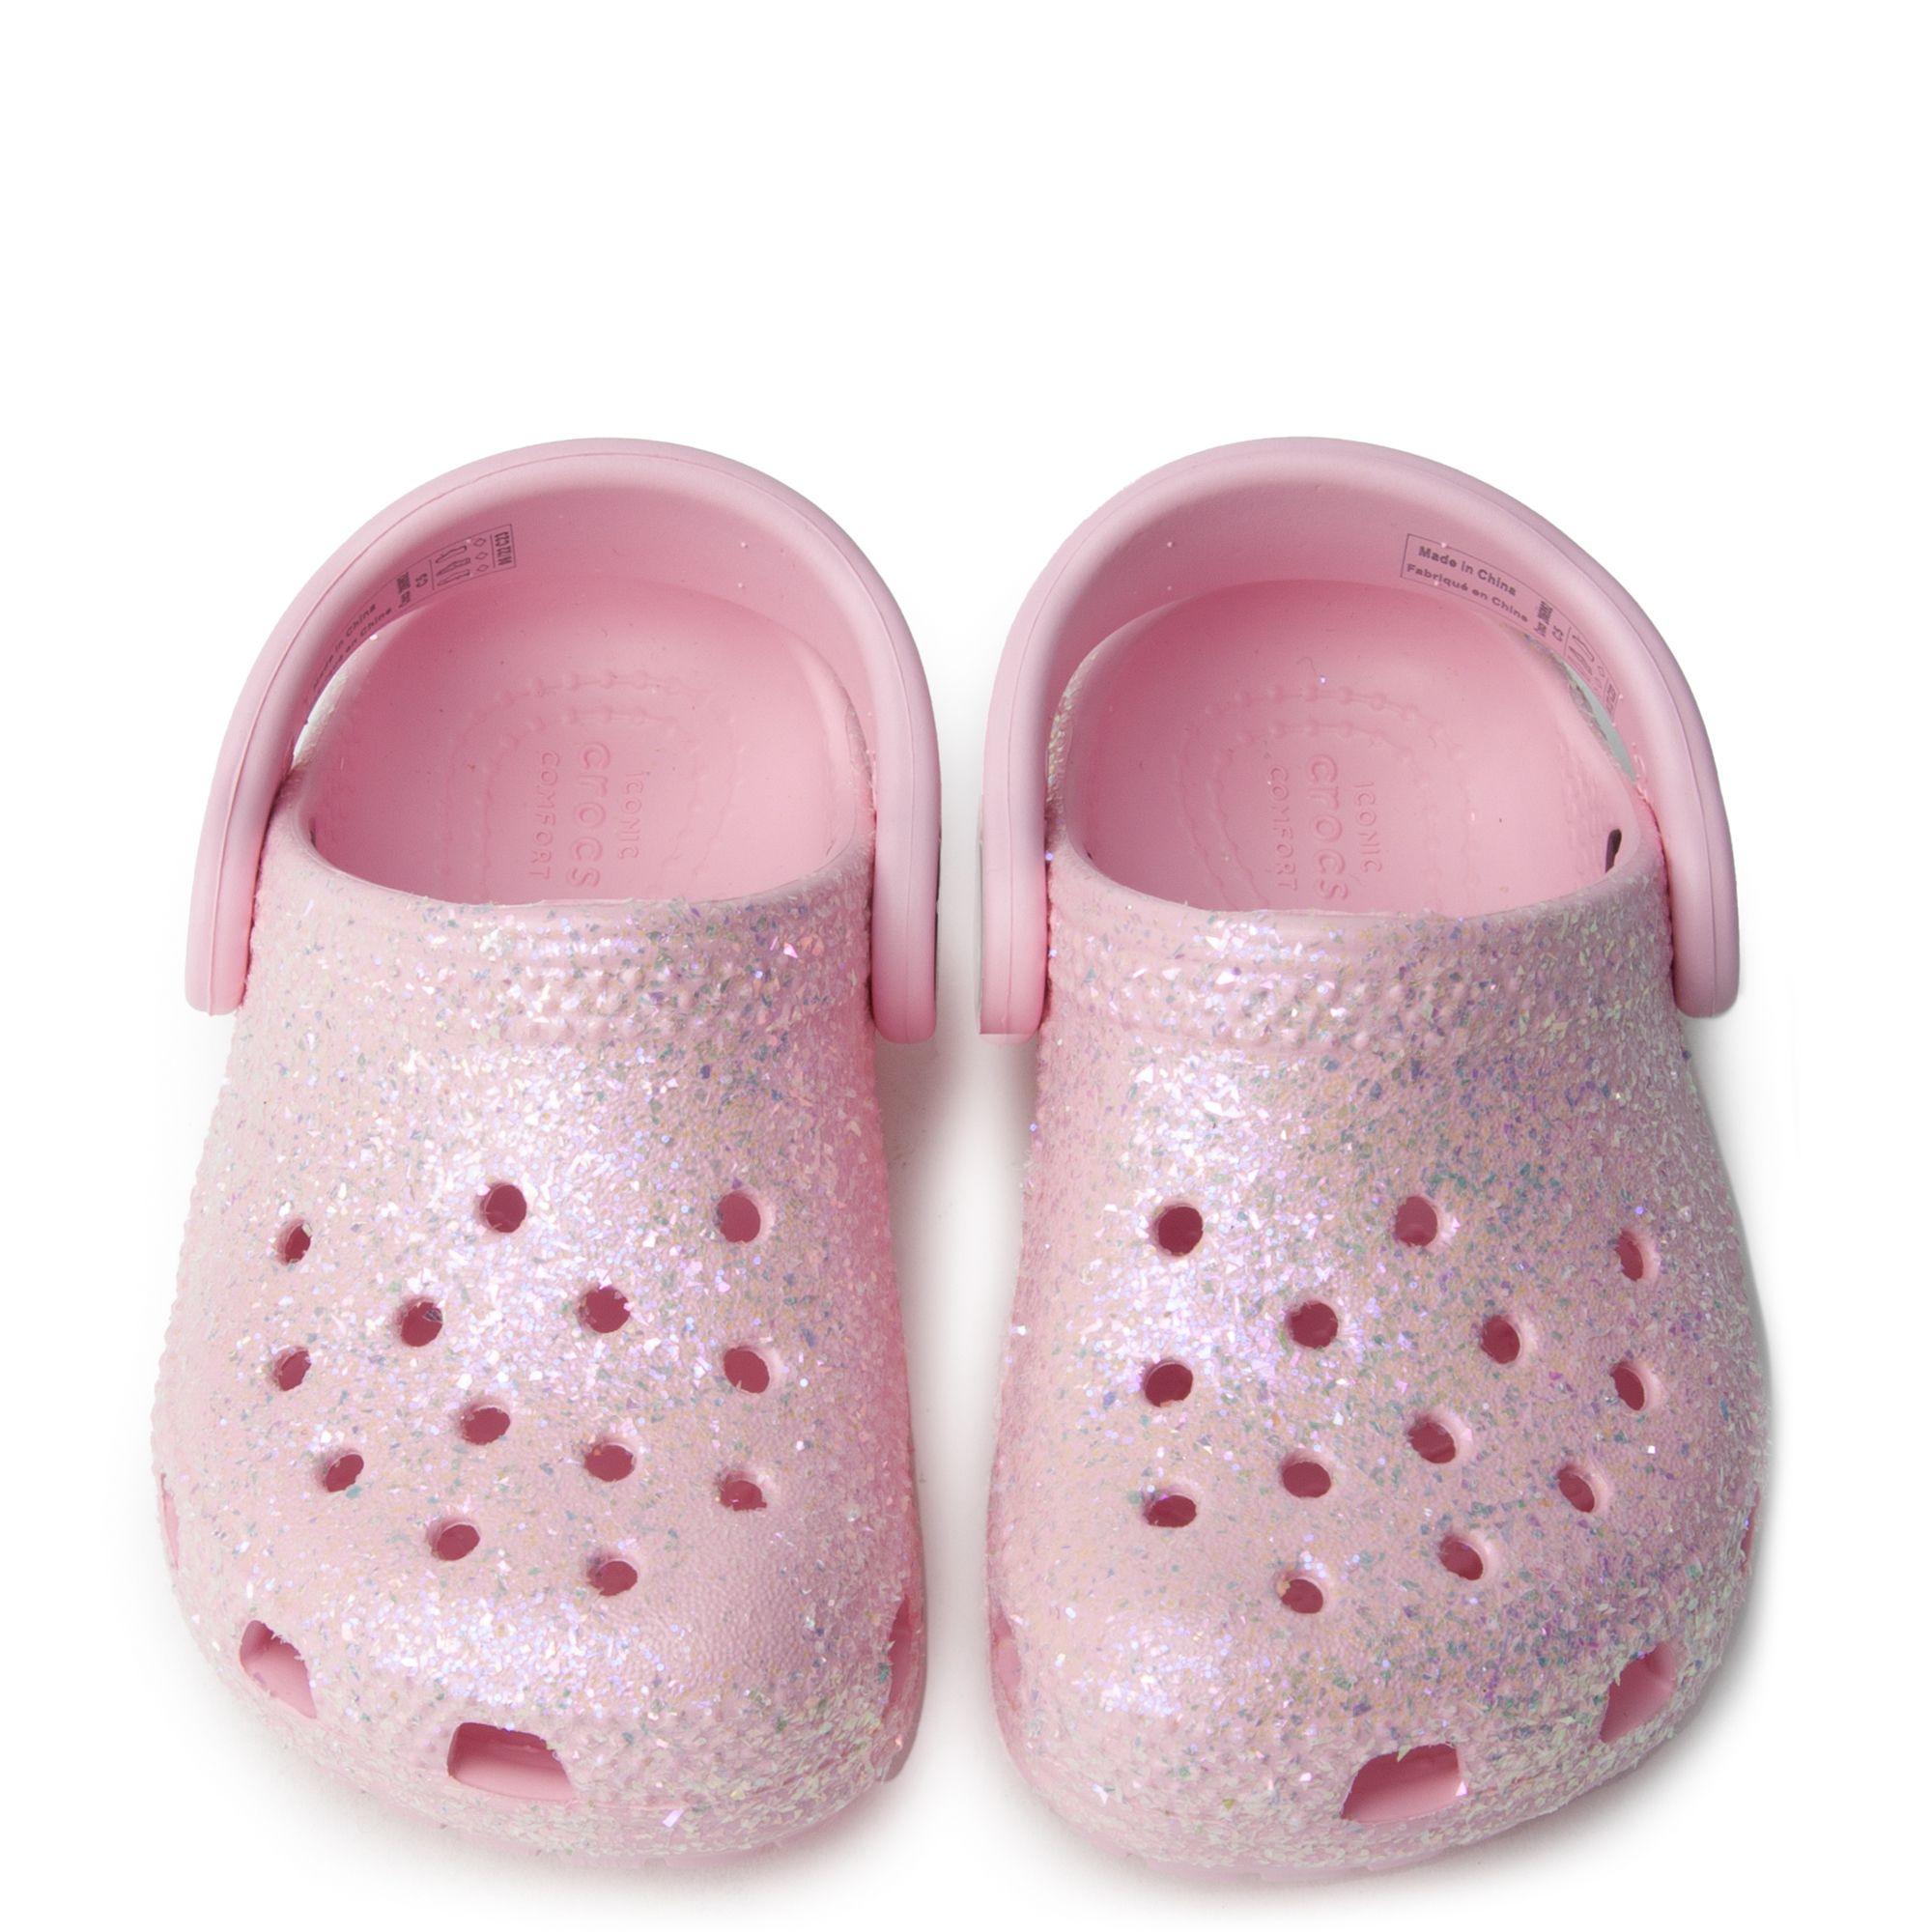 Crocs Classic Glitter Clog - Little Kid / Big Kid - Flamingo Pink